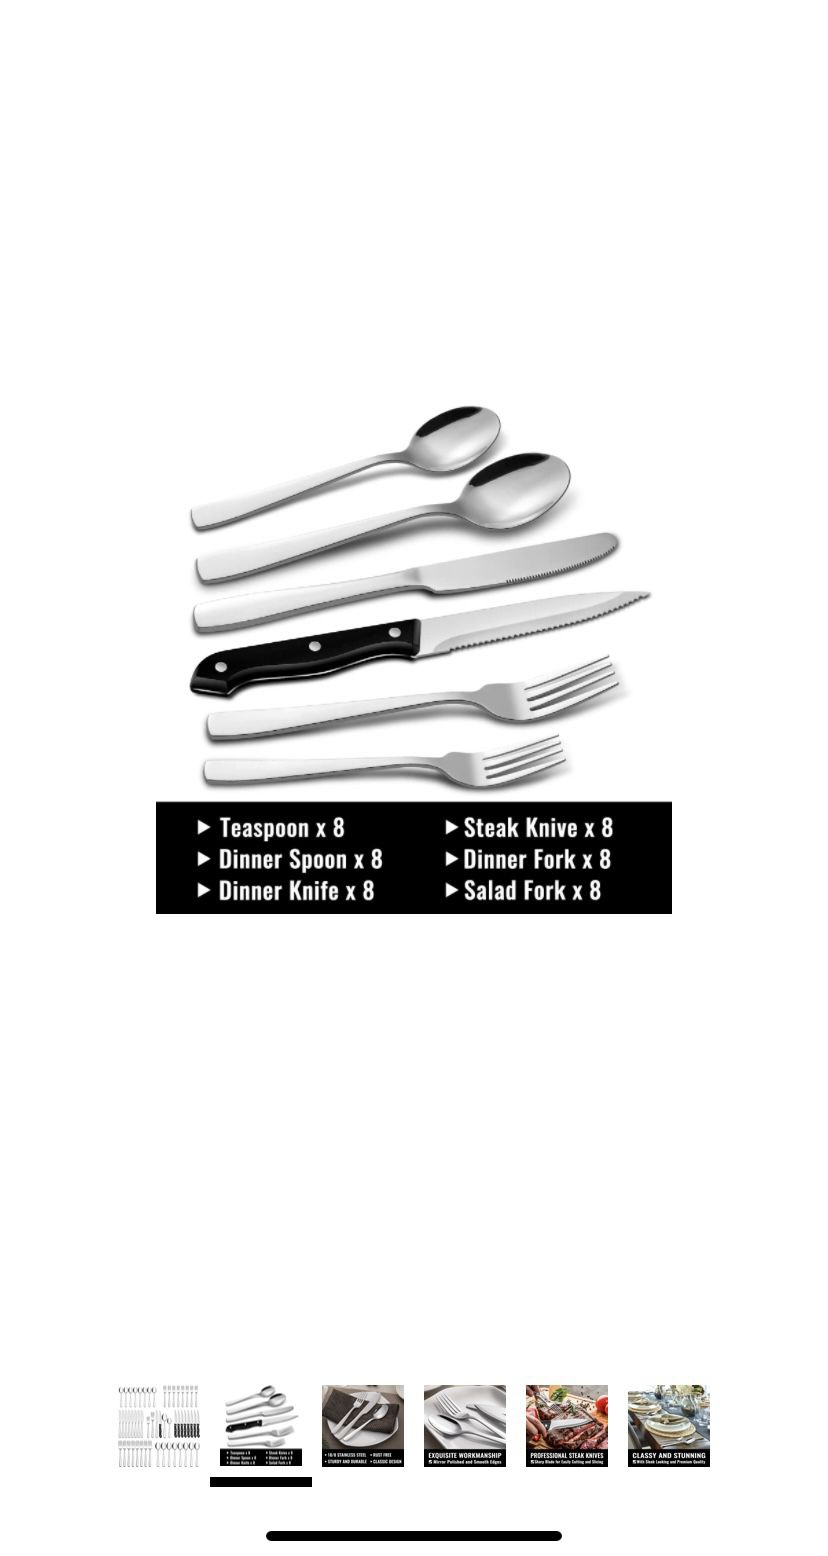 HIWARE 48-Piece Silverware Set with Steak Knives for 8, Stainless Steel  Flatware Cutlery Set For Home Kitchen Restaurant Hotel, Kitchen Utensils  Set